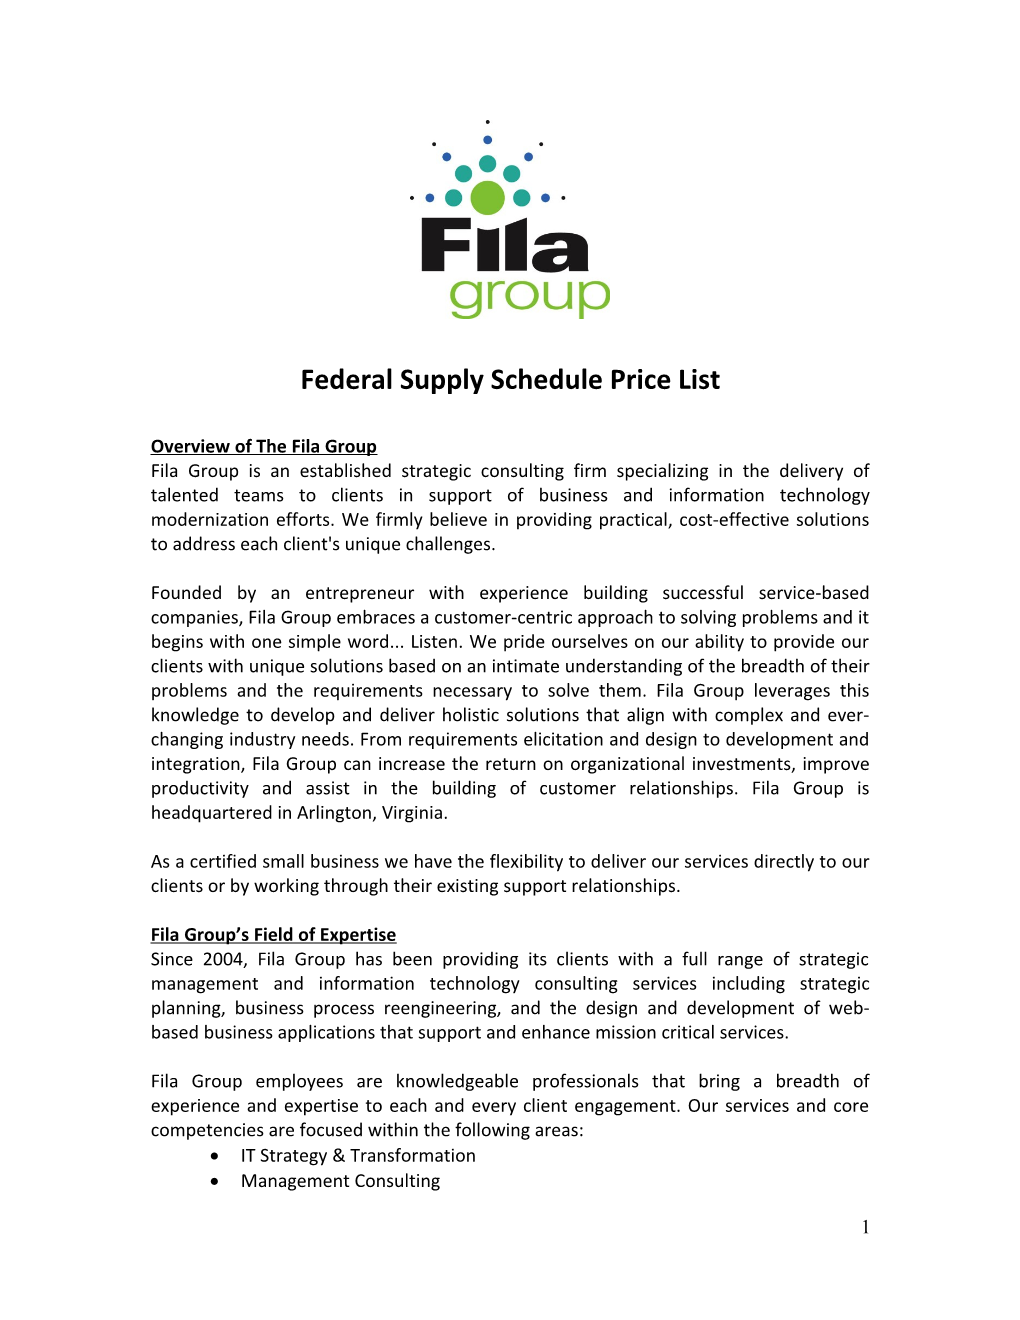 Federal Supply Schedule Price List s1